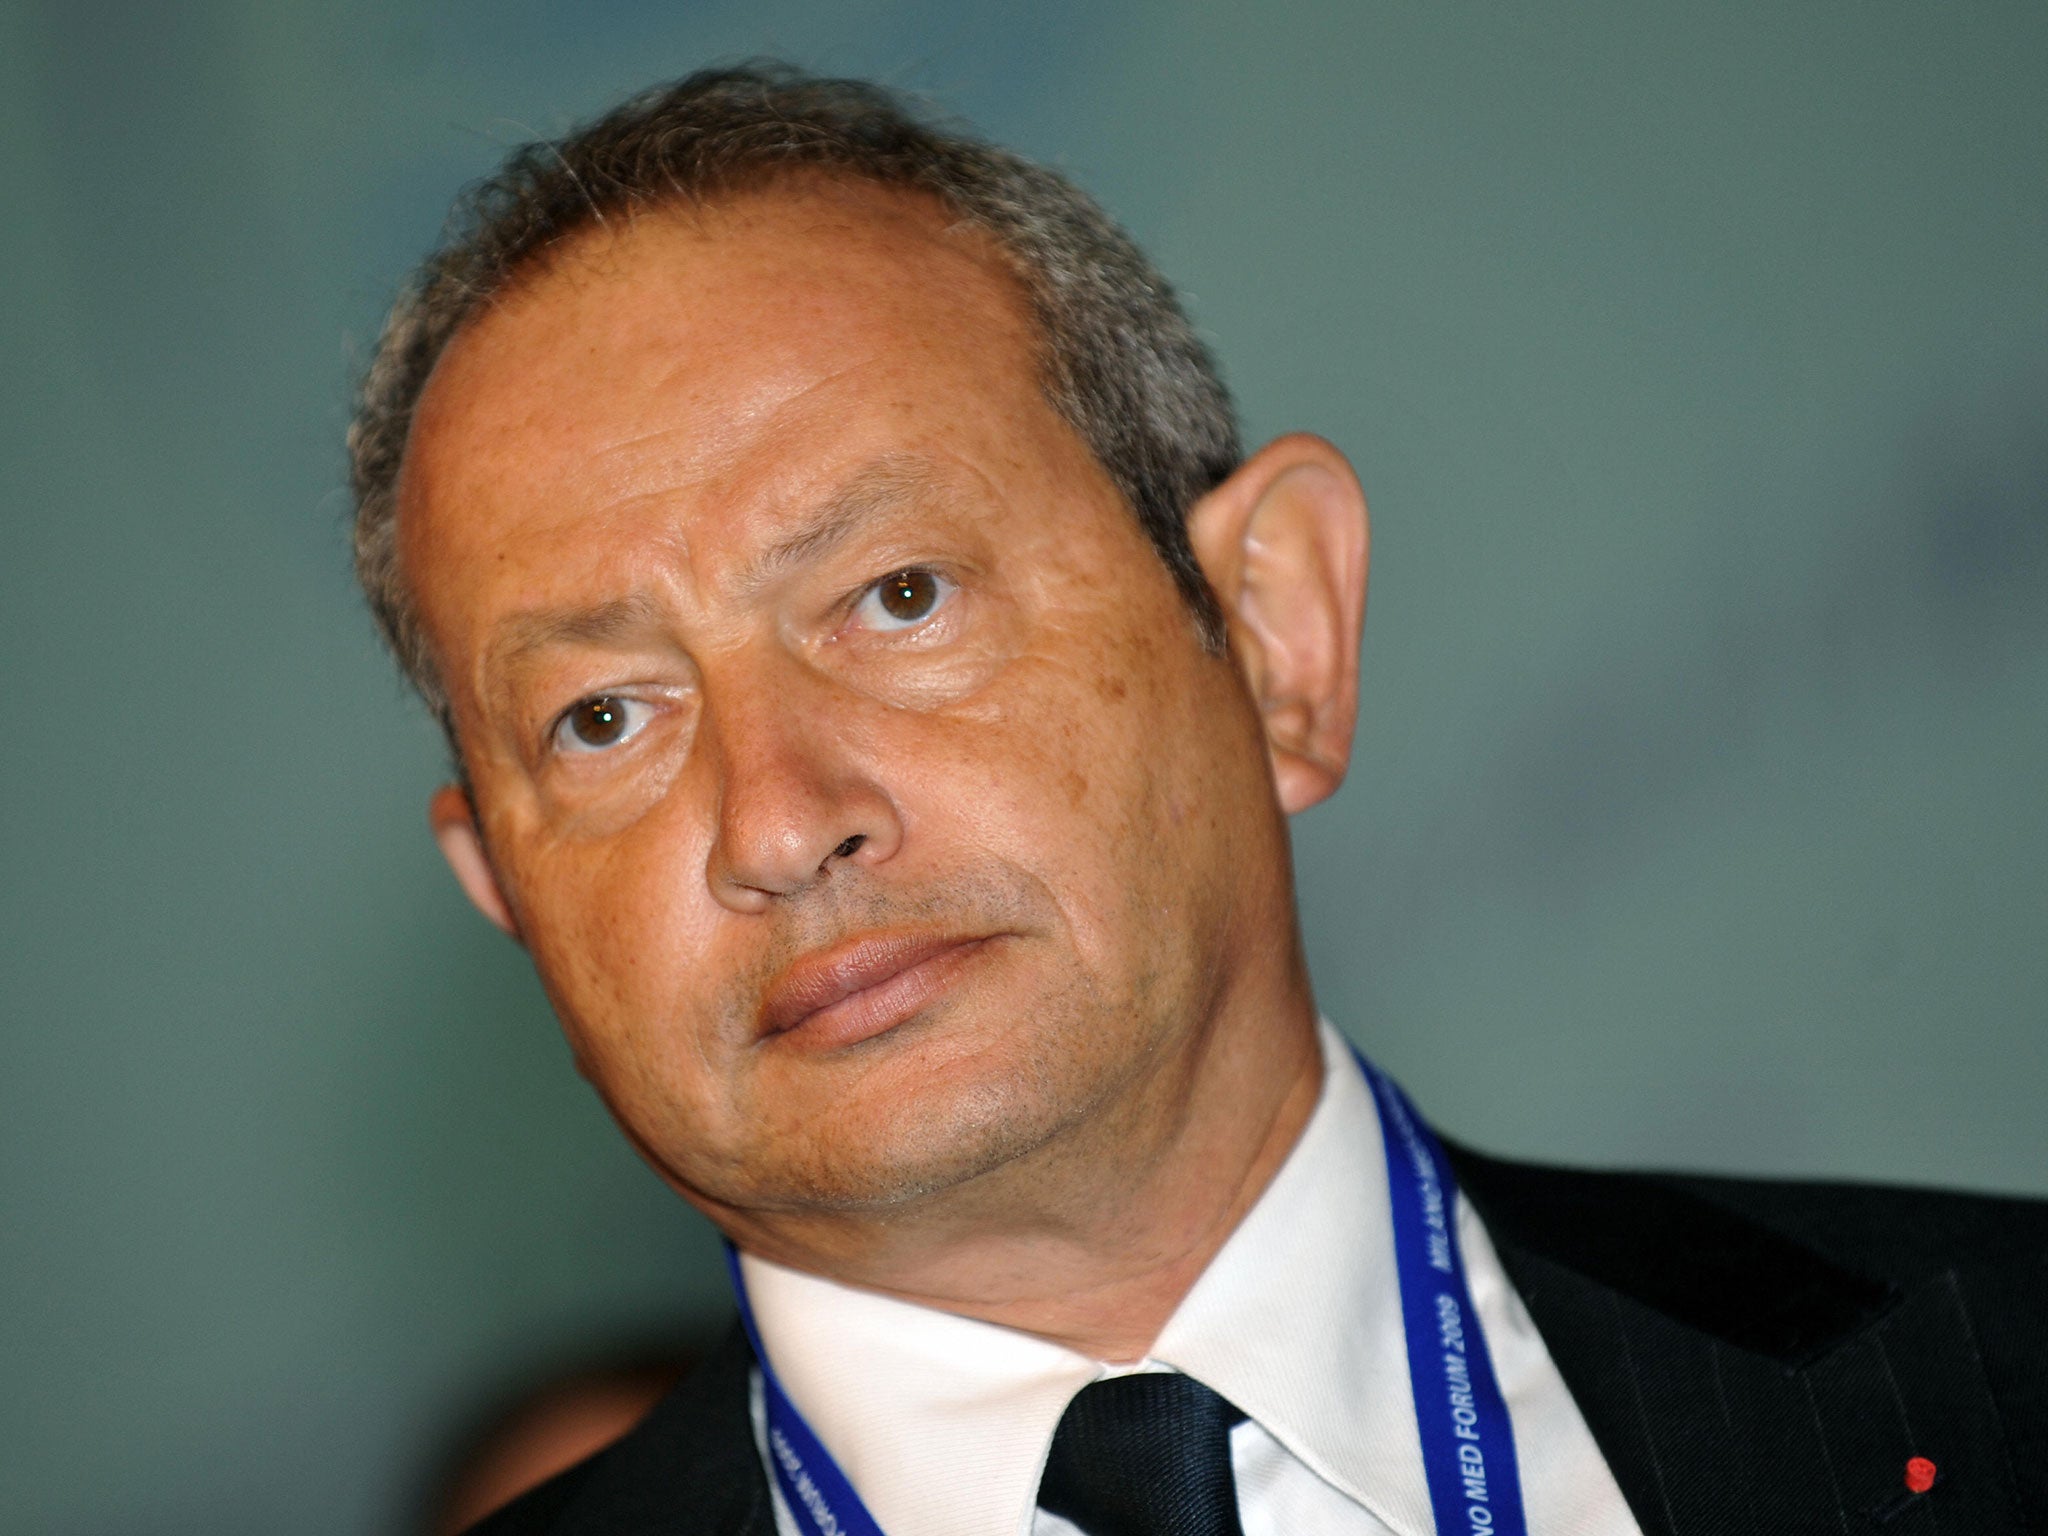 Naguib Sawiris plans to buy a Greek island to accommodate refugees